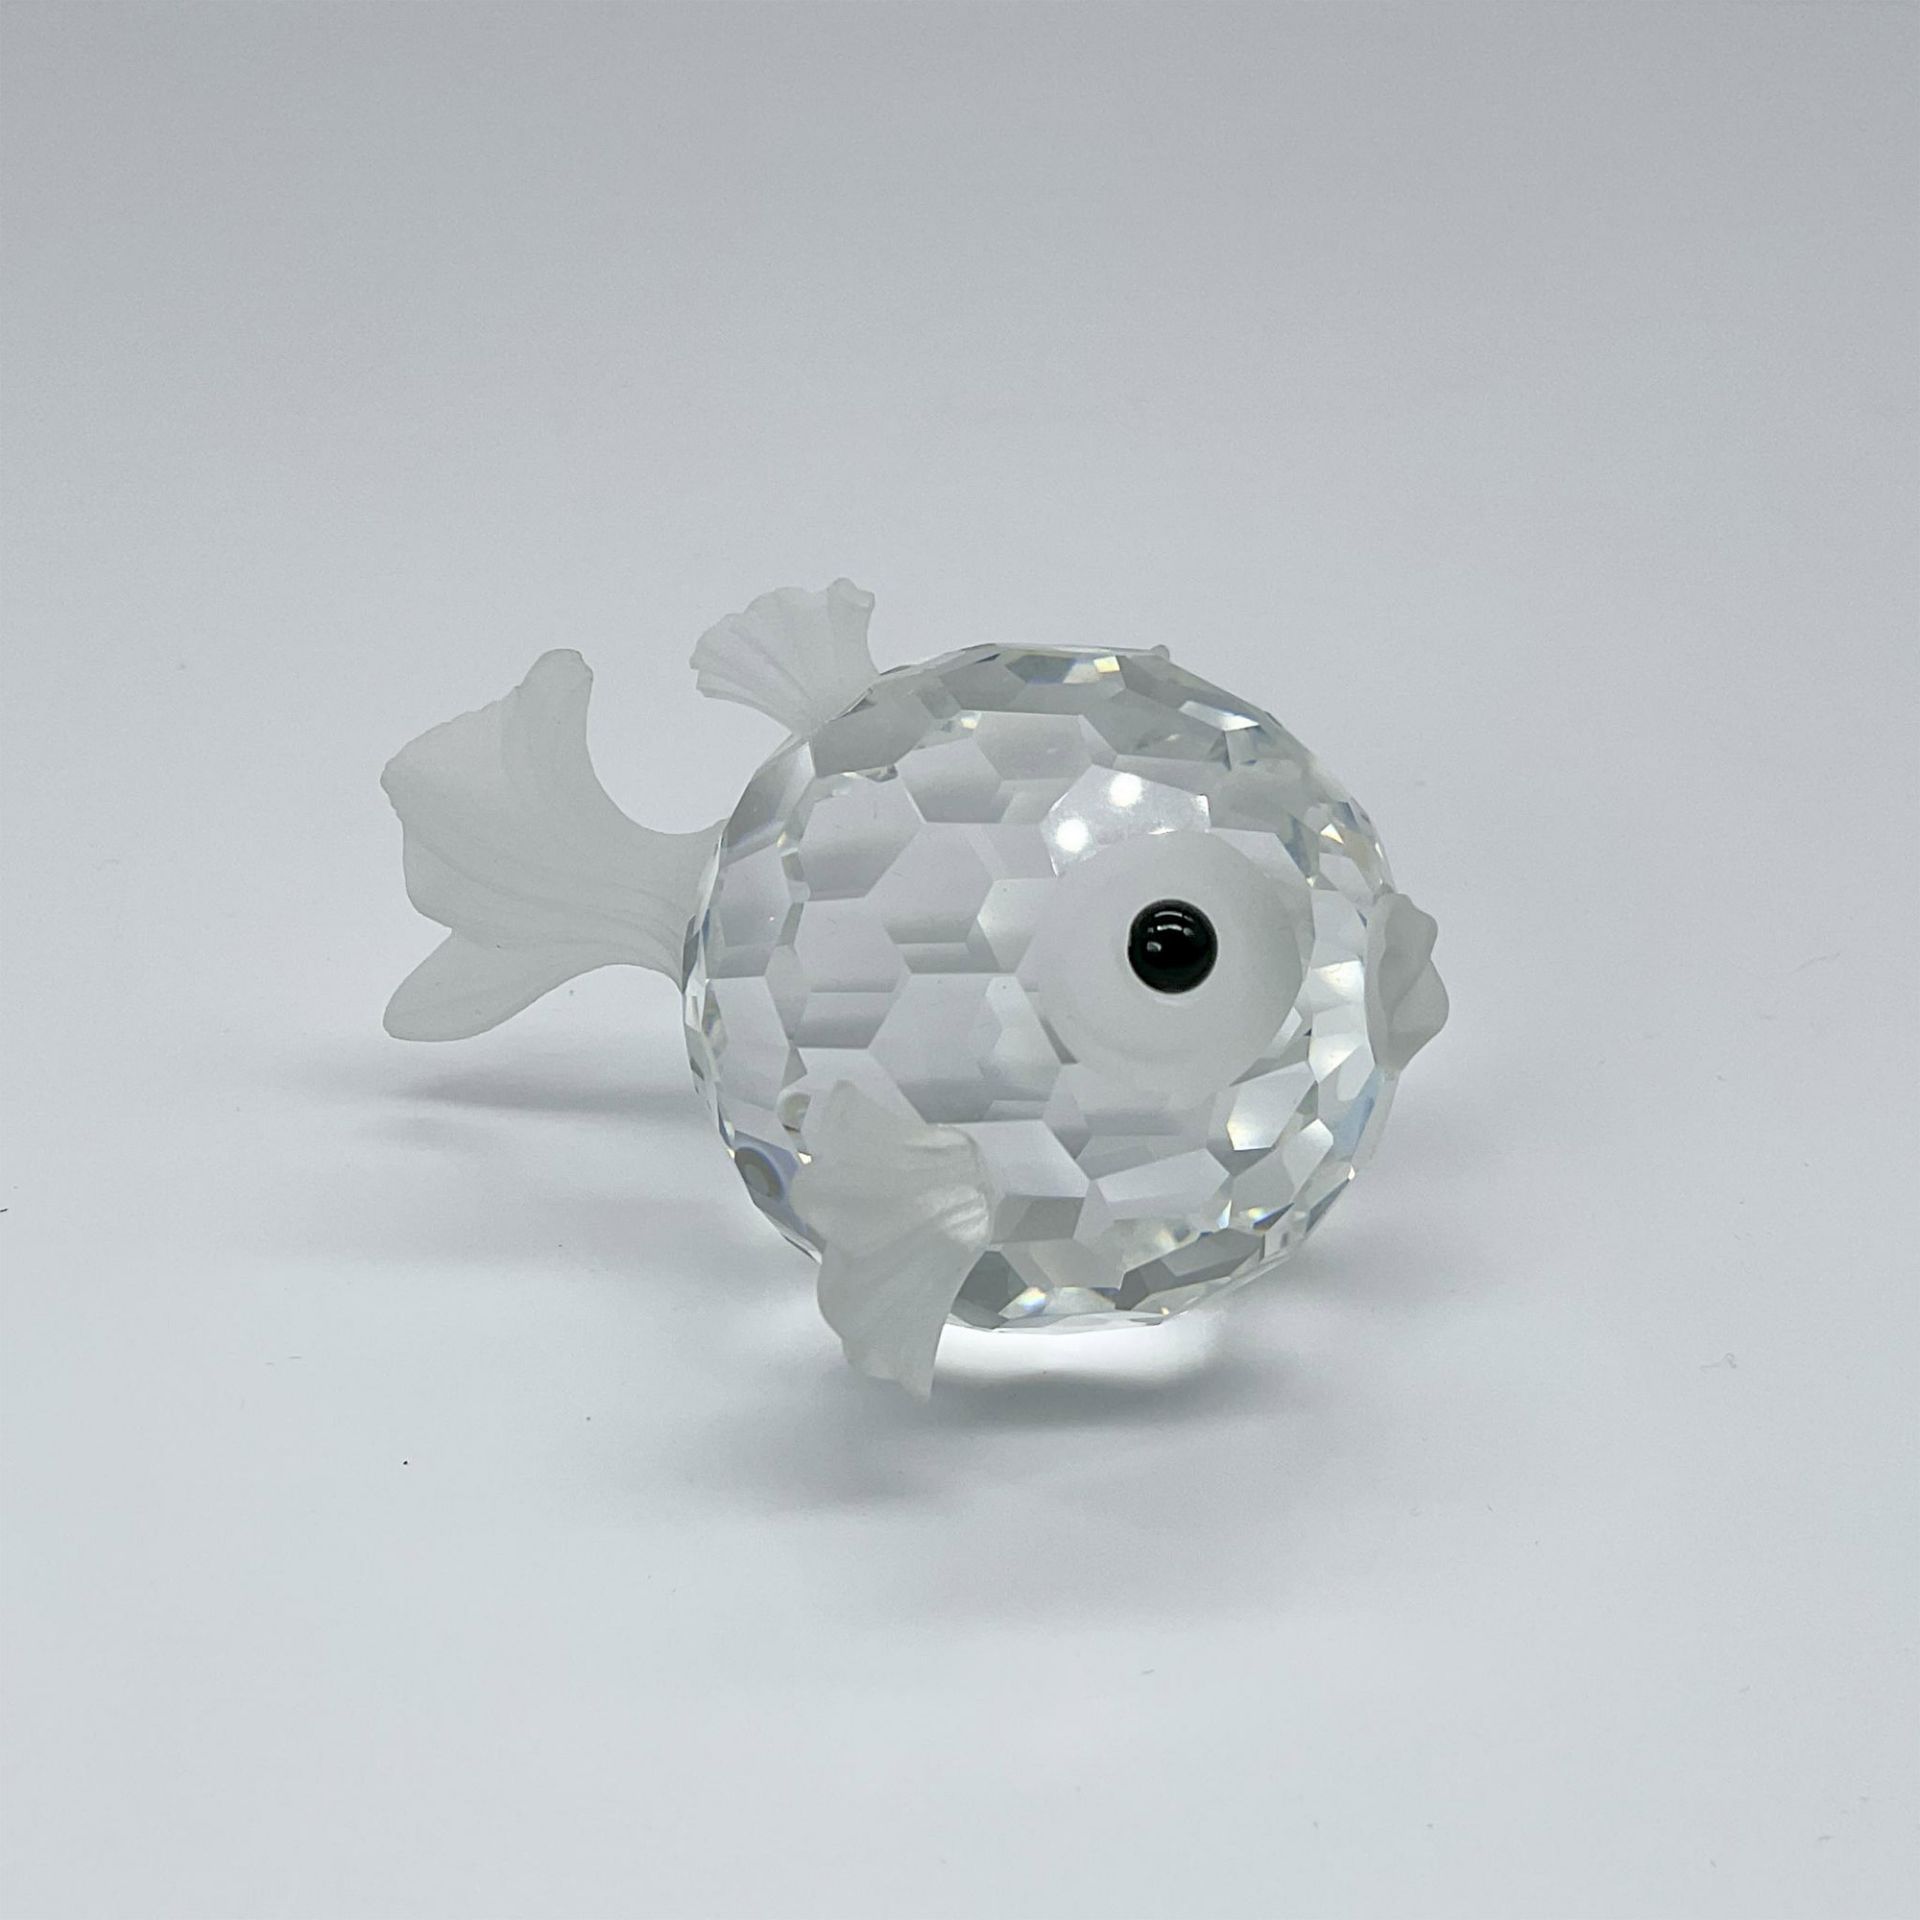 Swarovski Crystal Figurine, Blowfish - Image 2 of 3